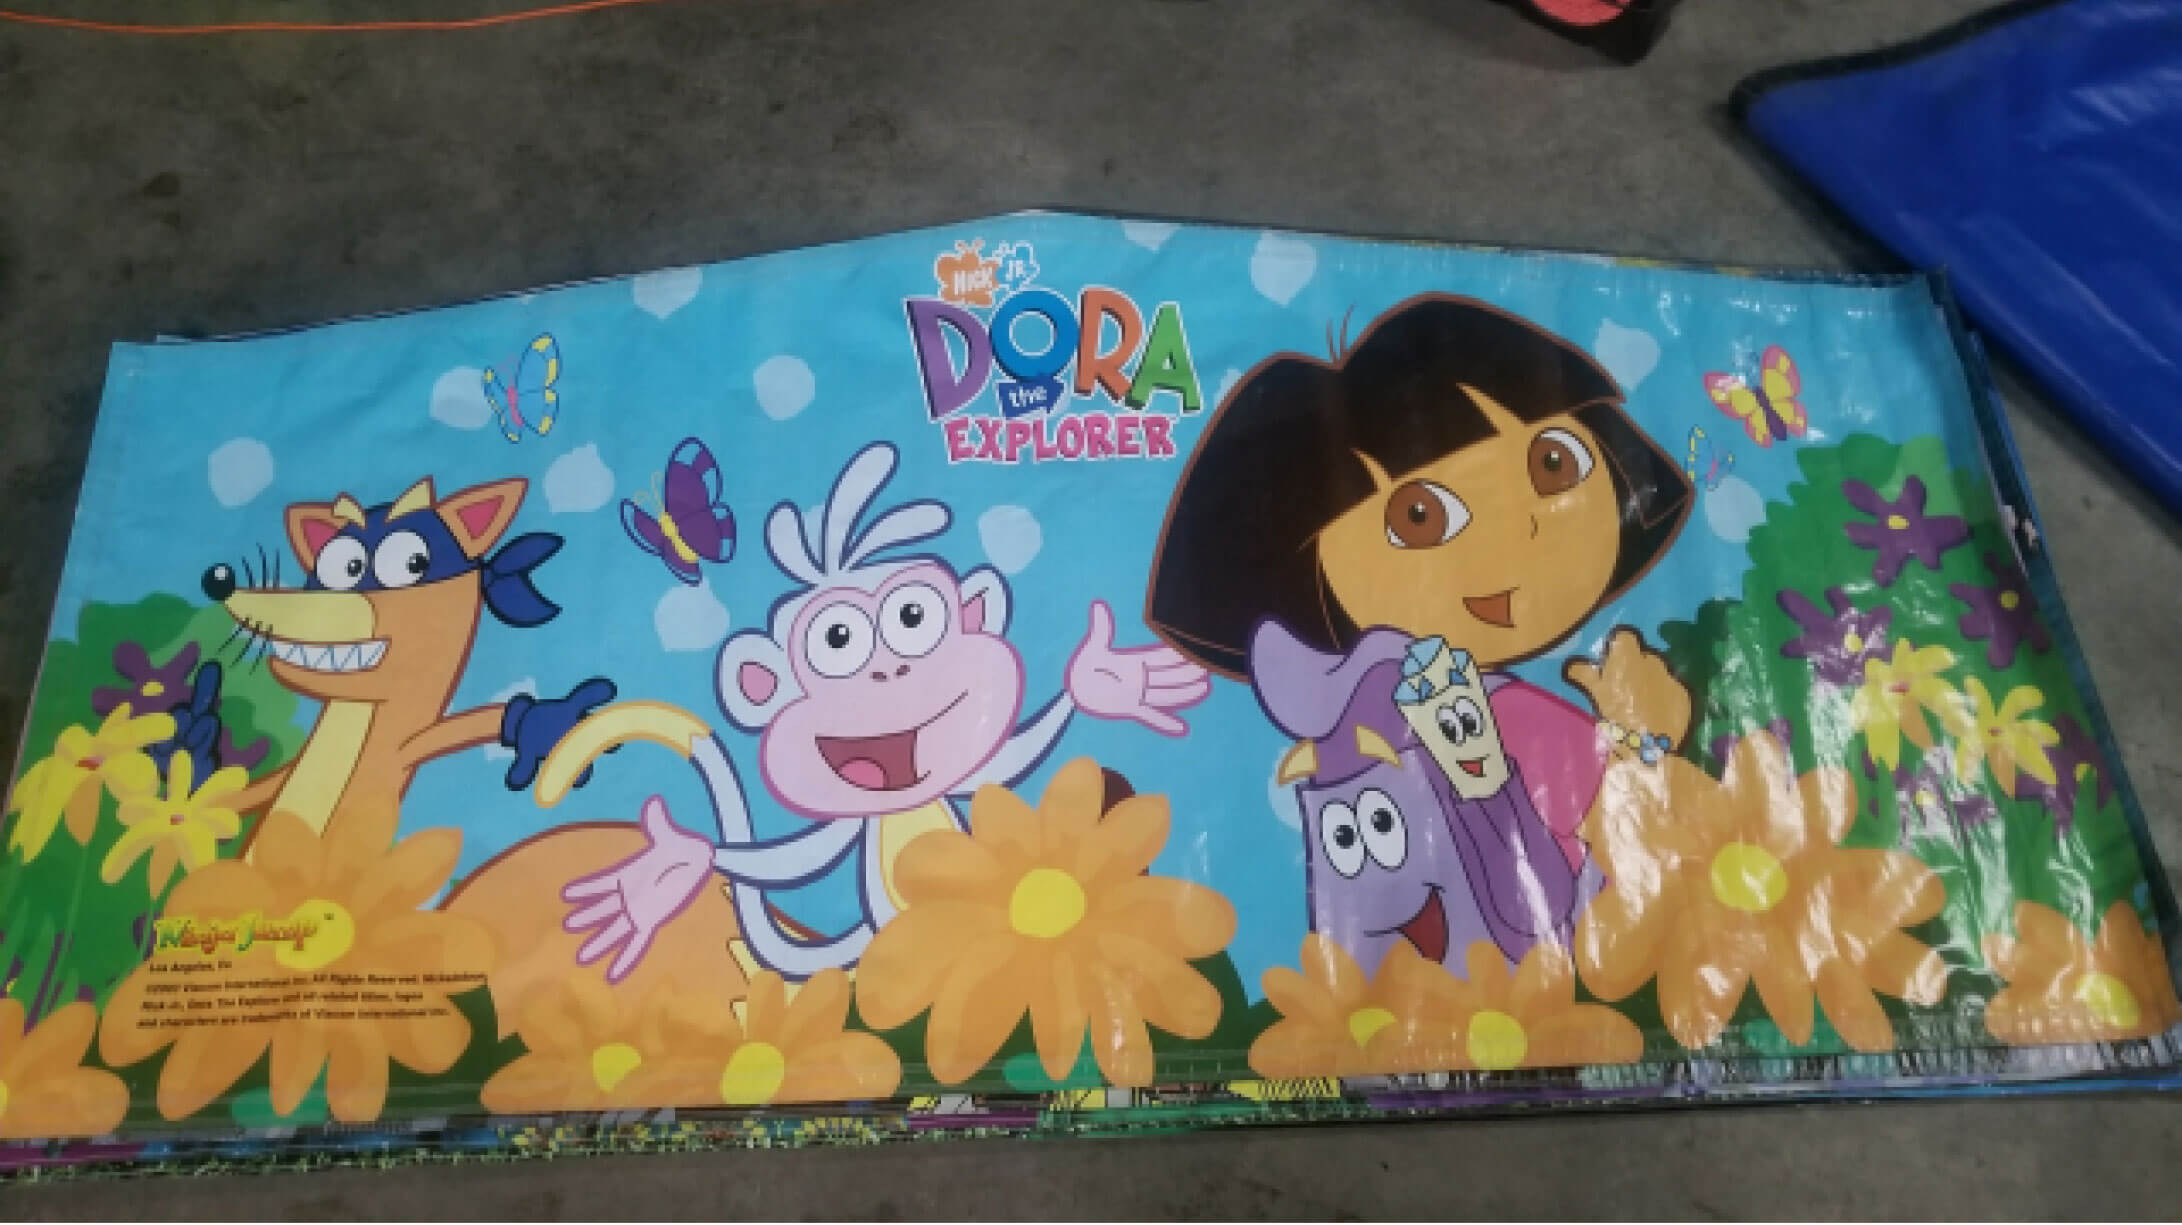 Dora the Explorer Bounce House Panel